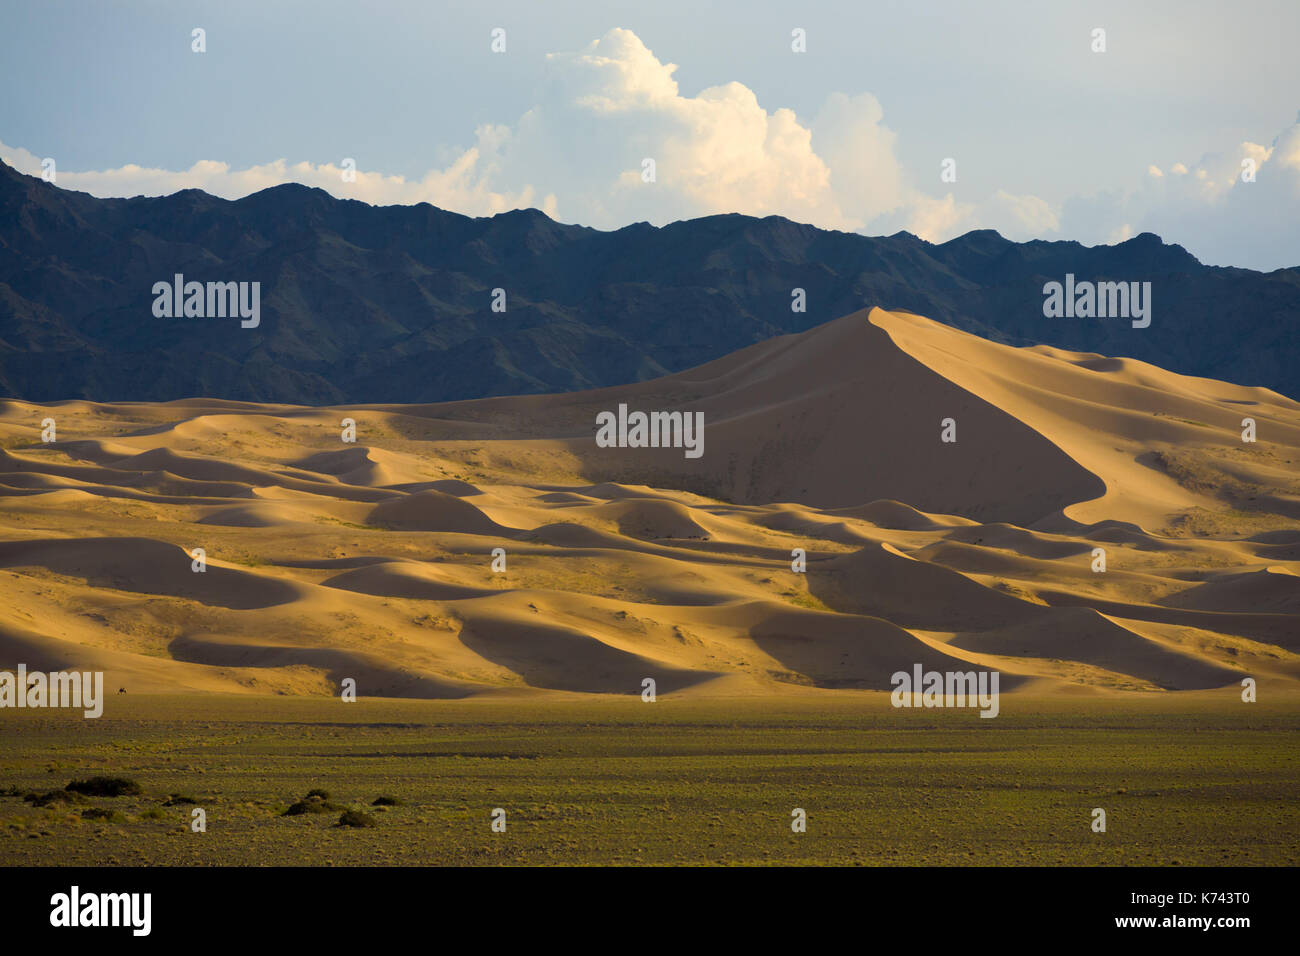 Cammelli lontane visto alla base del khongor els dune di sabbia con montagne torreggianti background in Mongolia meridionale Foto Stock